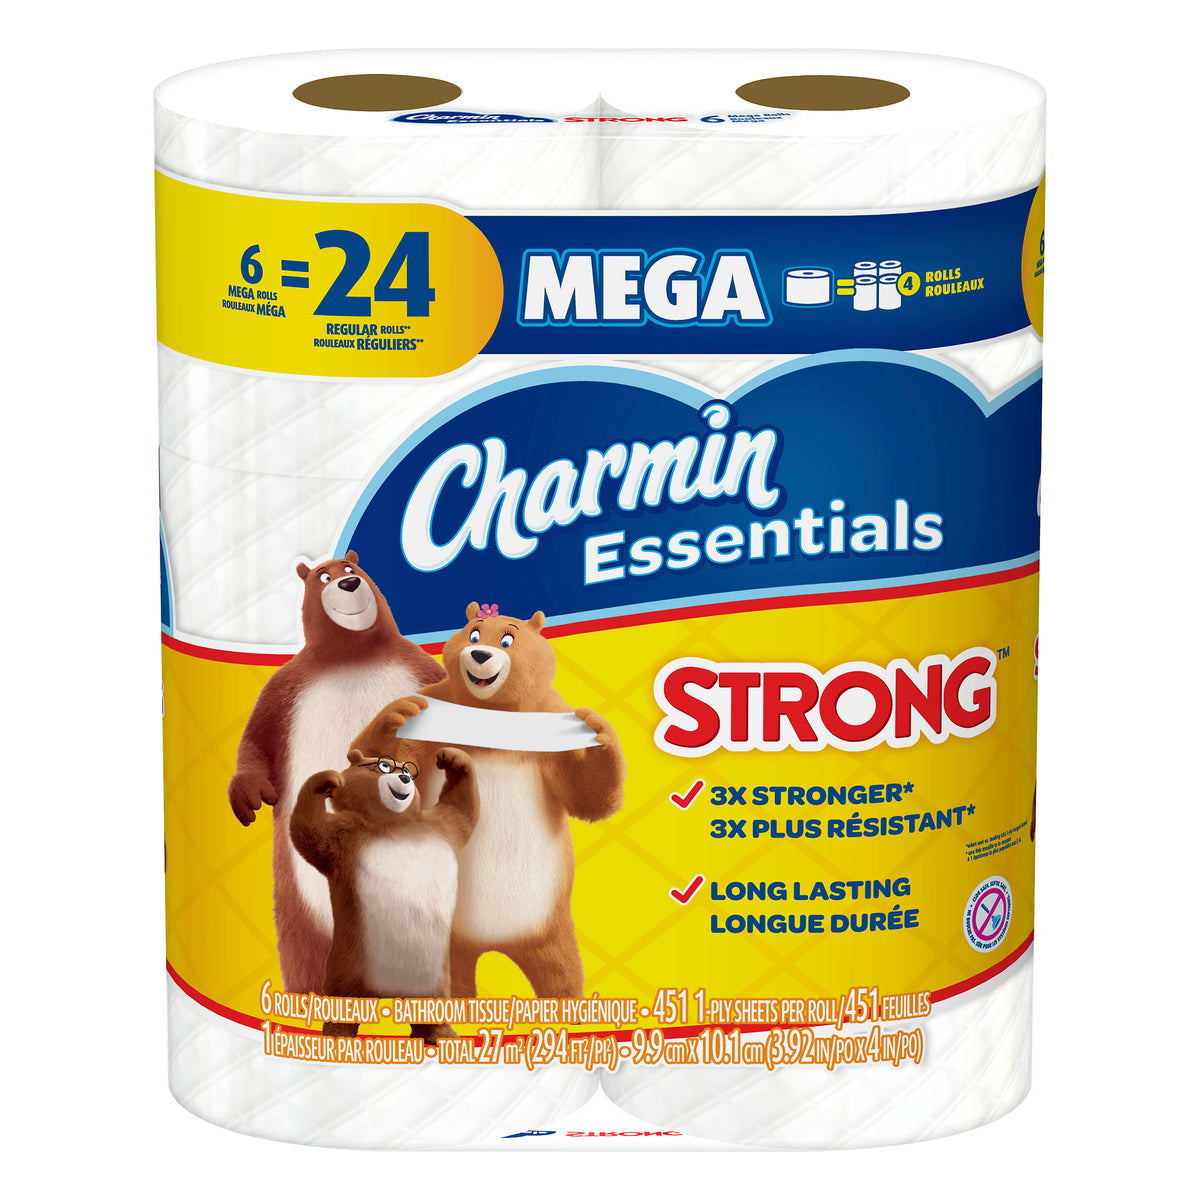 Charmin Ultra Strong Mega Roll Toilet Paper, 6 rolls - Kroger